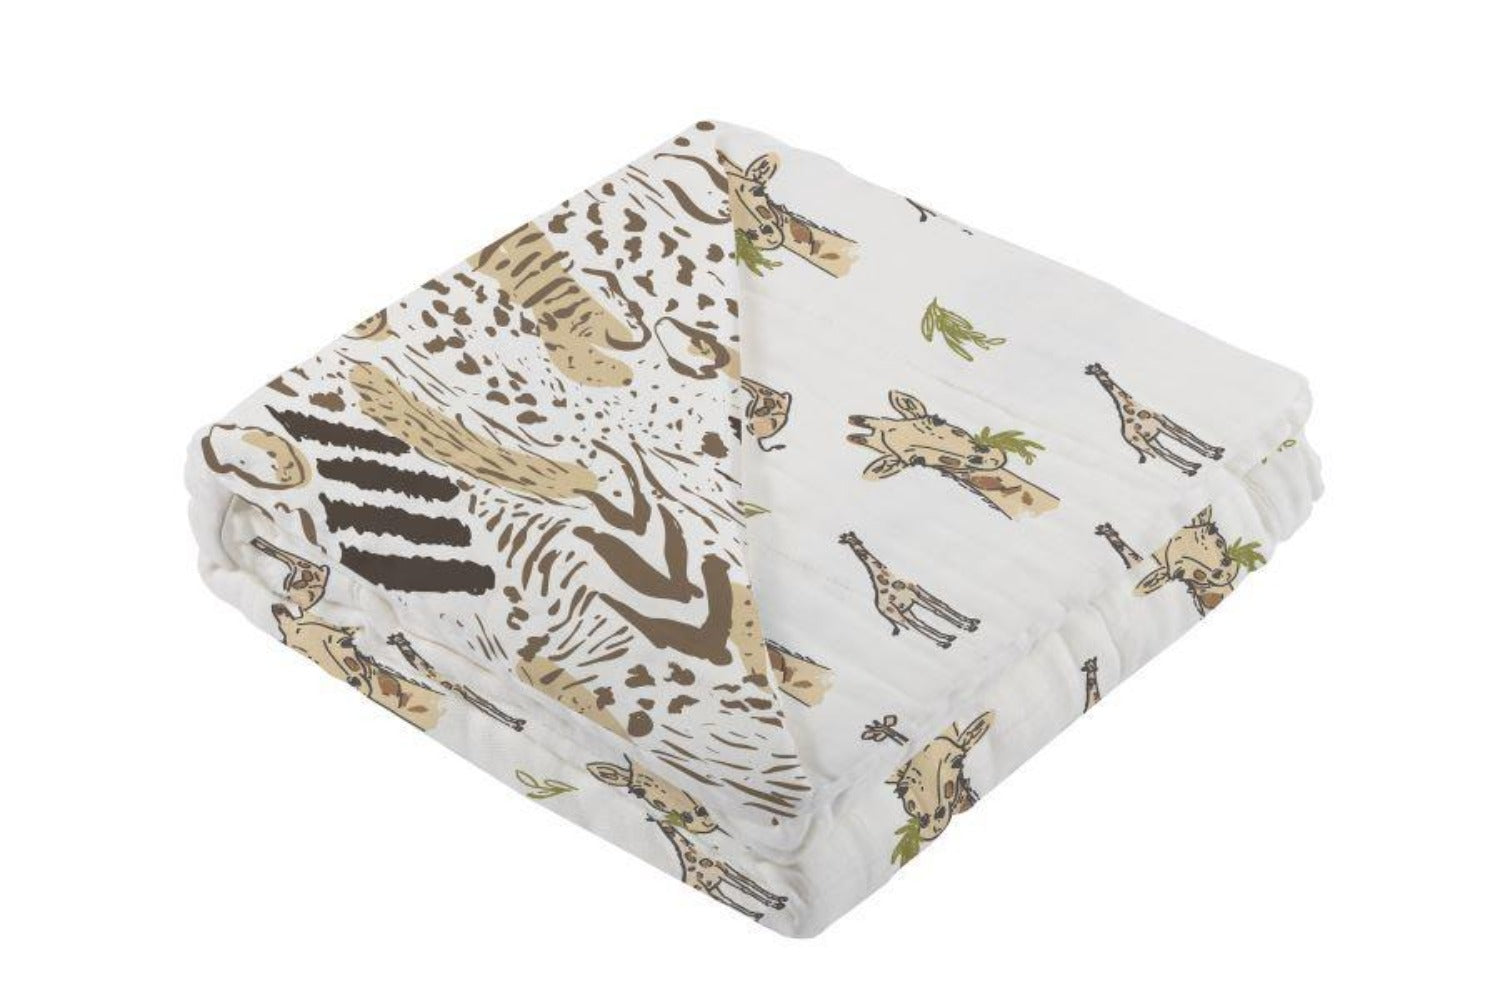 Hungry Giraffe and Animal Print Newcastle Blanket